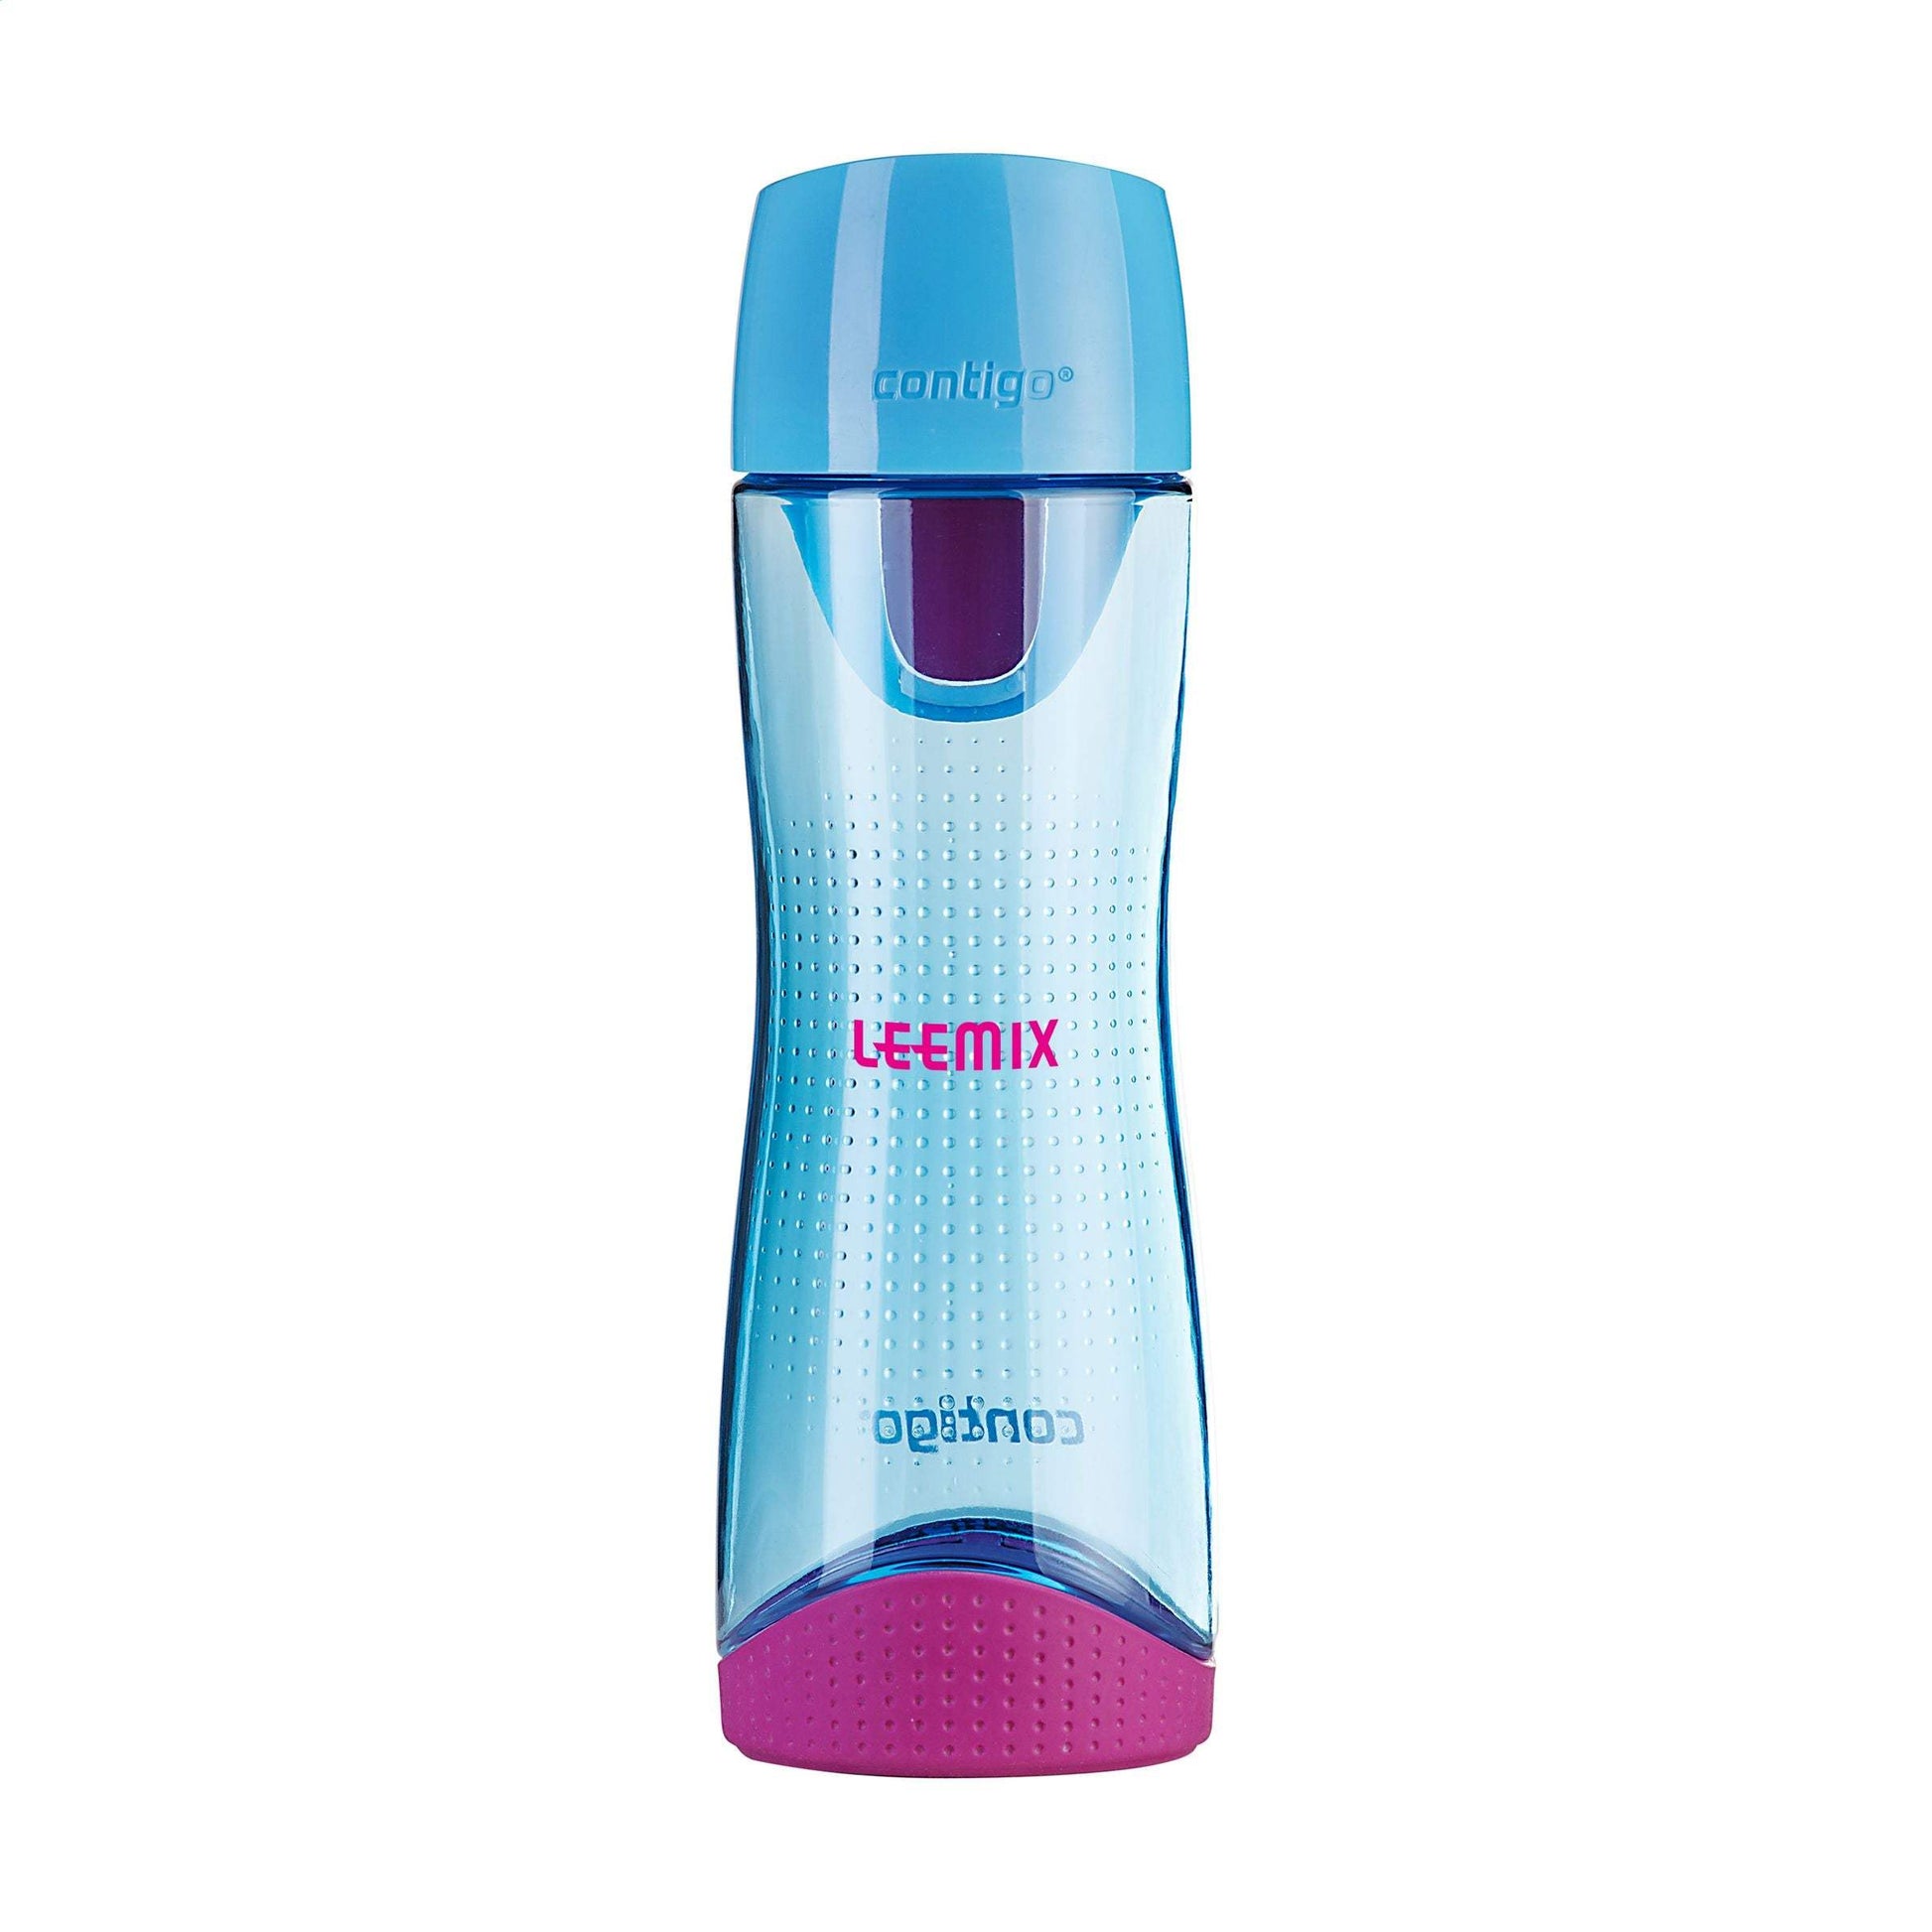 Contigo® Swish 500 ml Drinking Bottle - The Luxury Promotional Gifts Company Limited